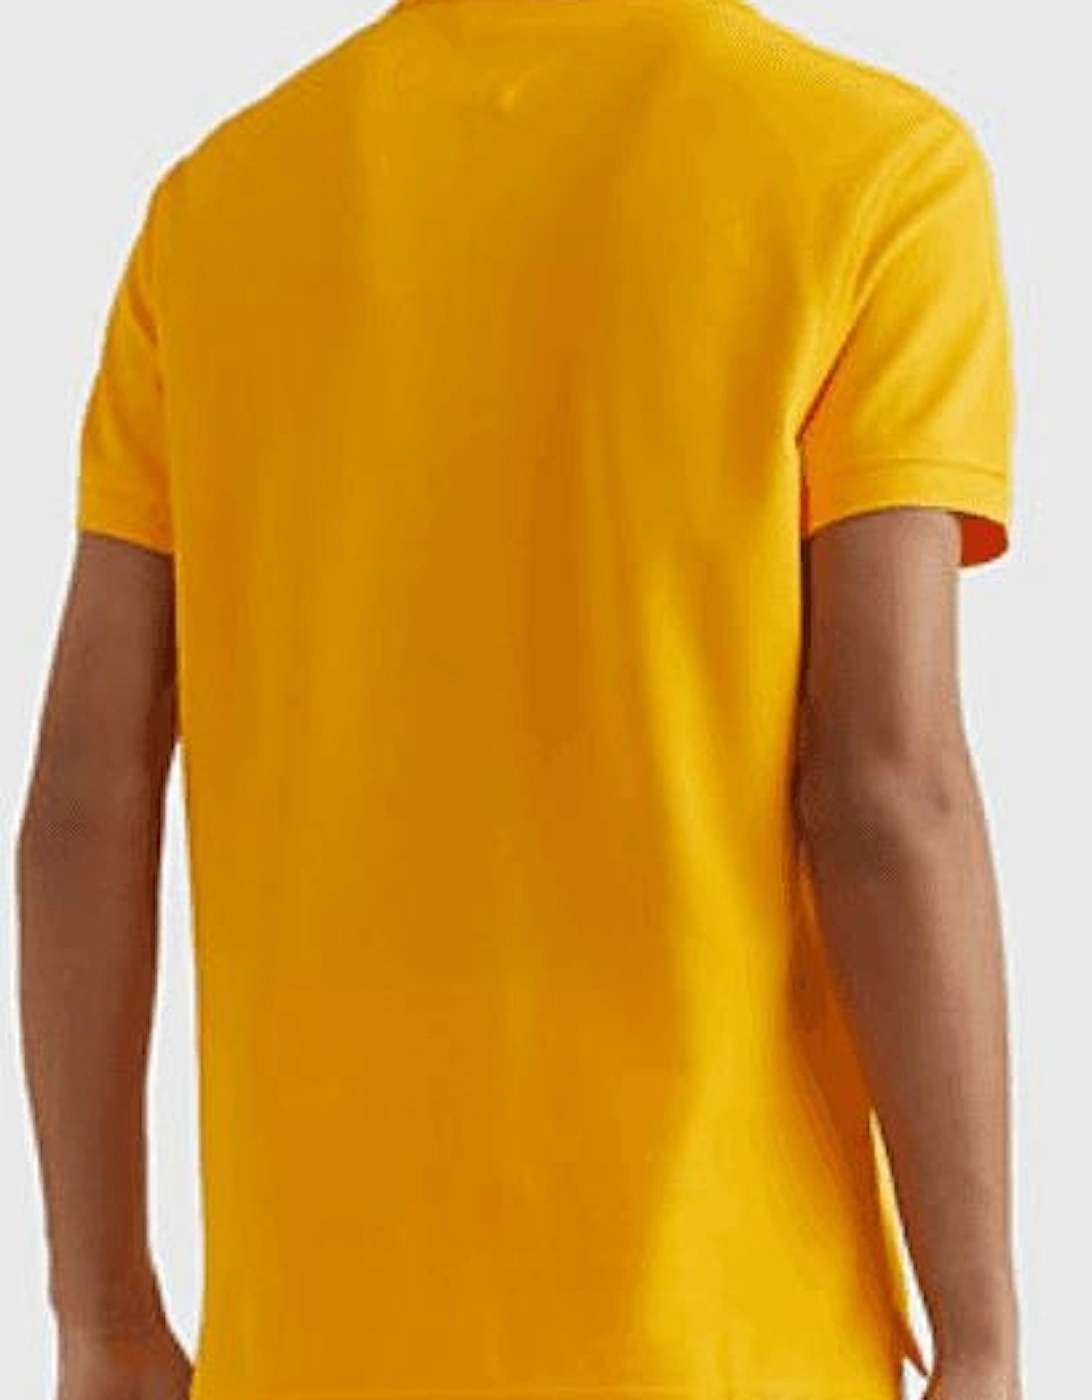 Classic 1985 Slim Fit Yellow Polo Shirt